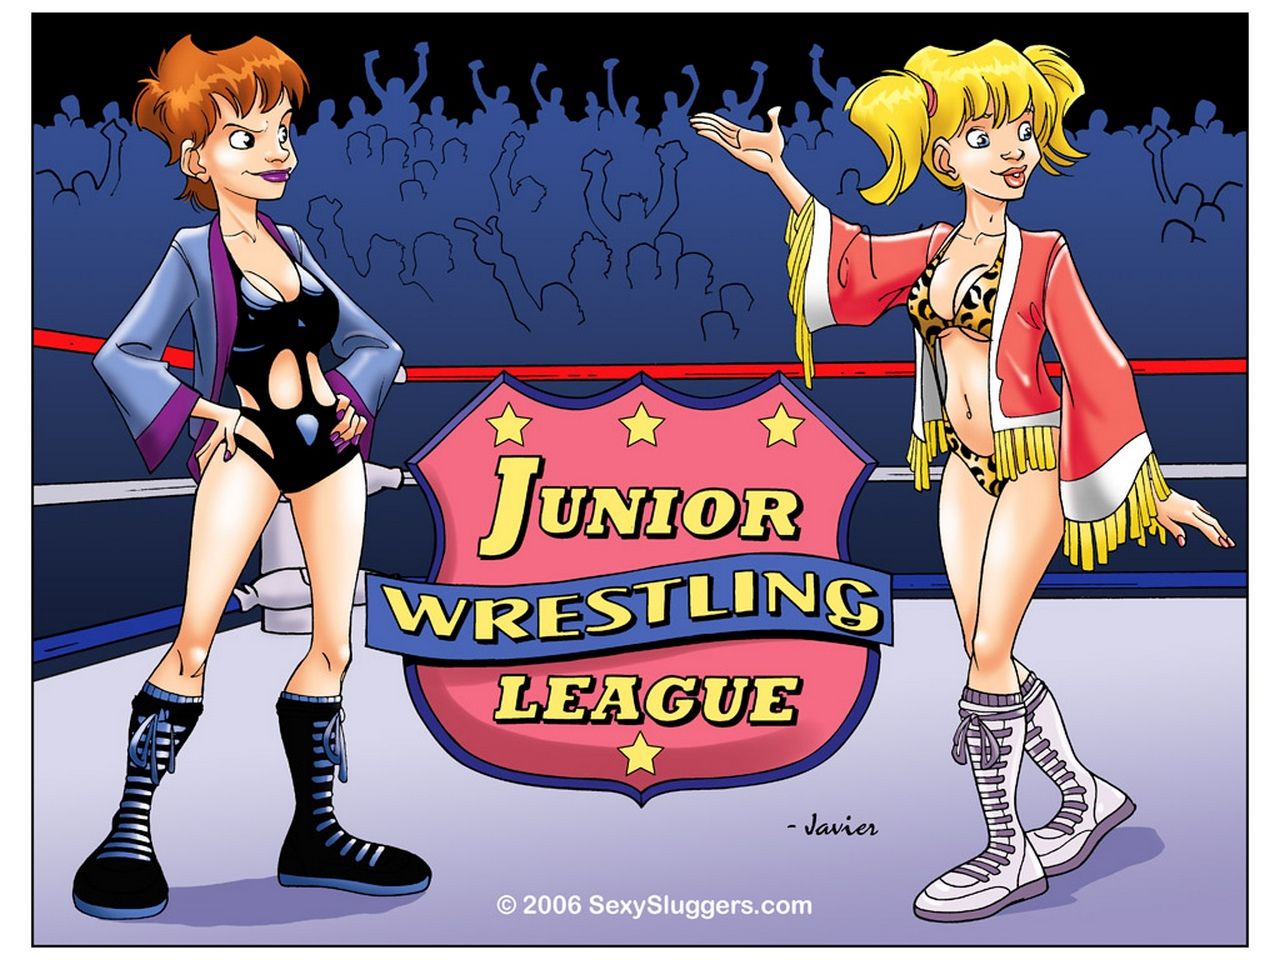 Junior Wrestling League page 1